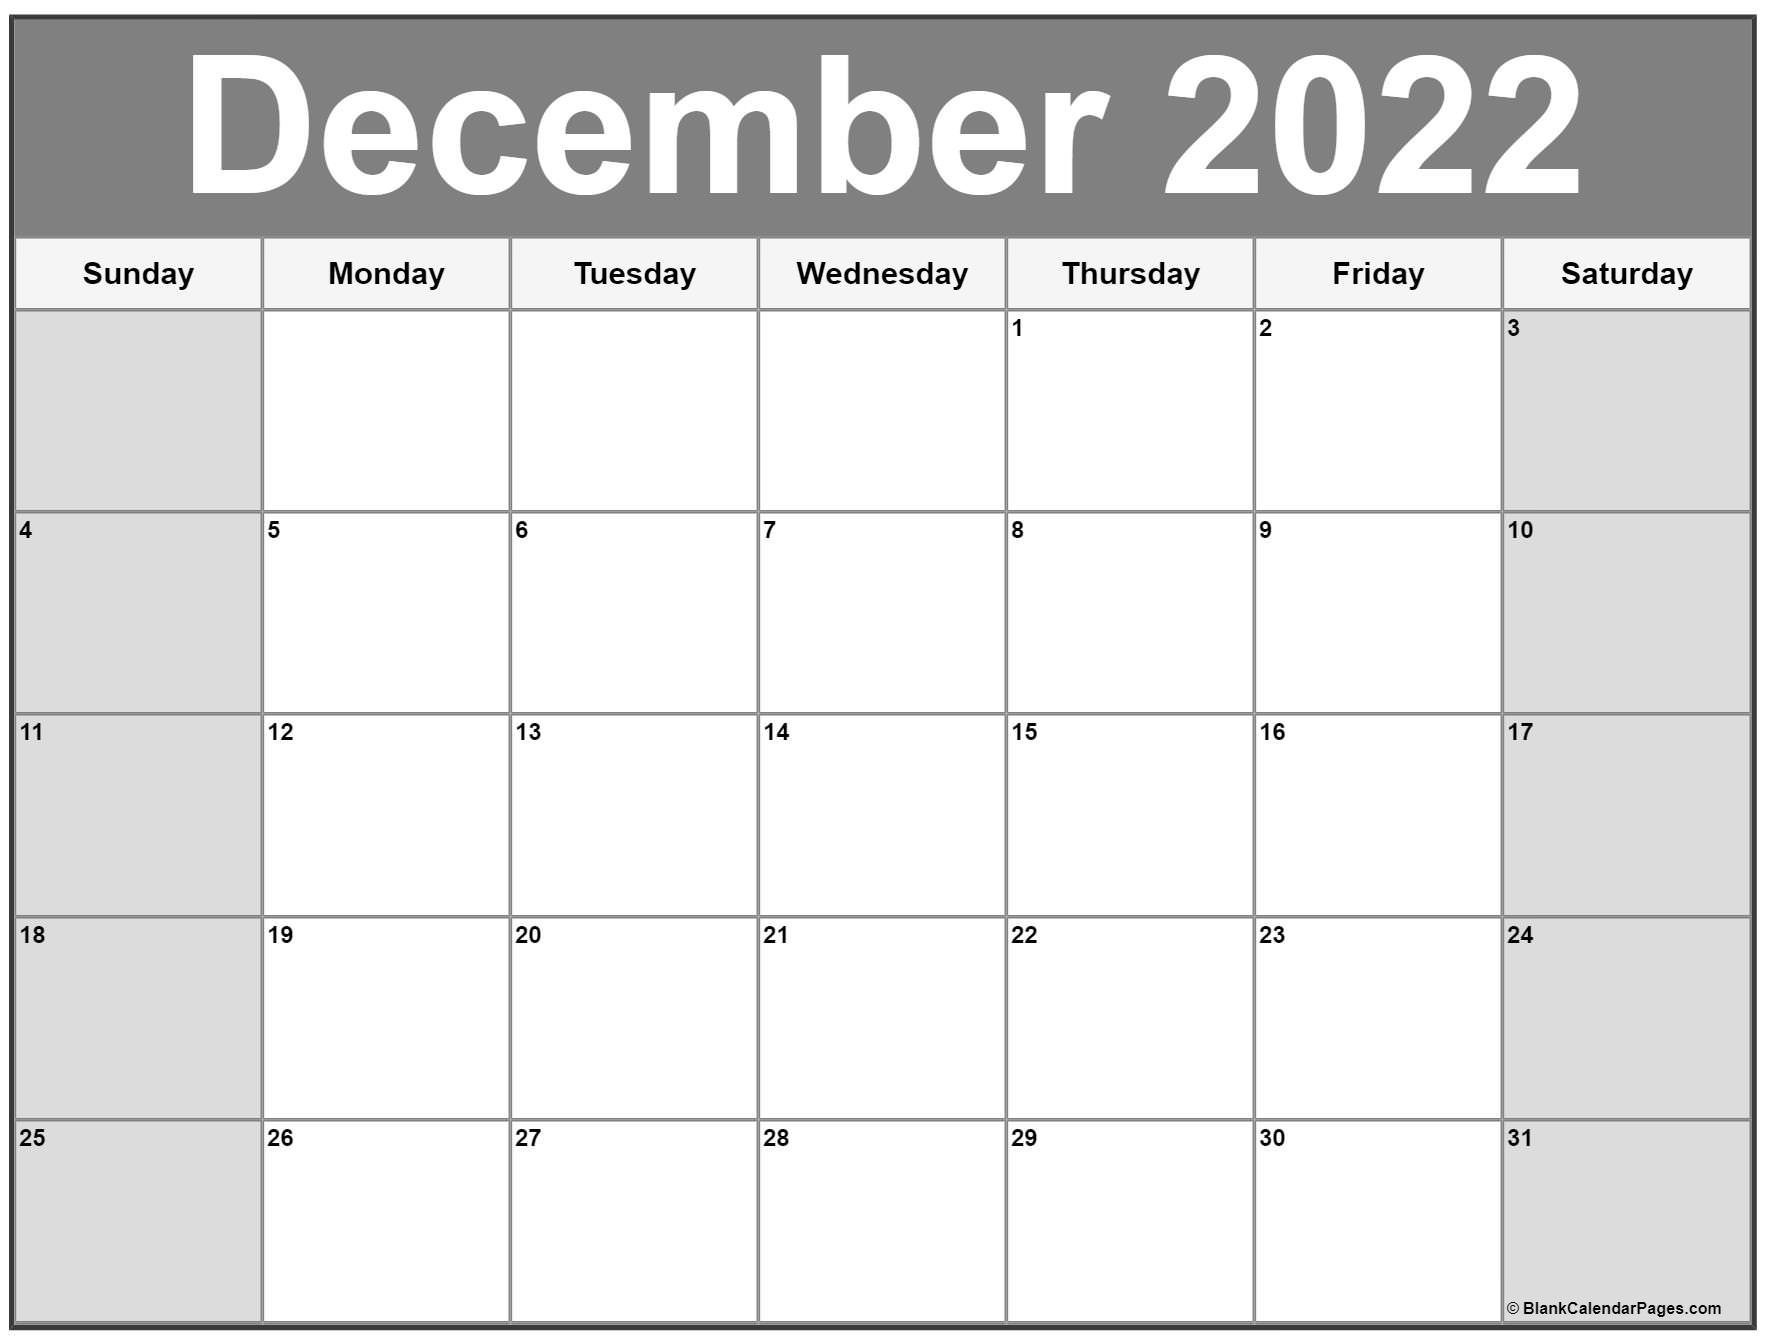 December 2022 Calendar | Free Printable Calendar Templates December 2022 Printable Calendar With Holidays